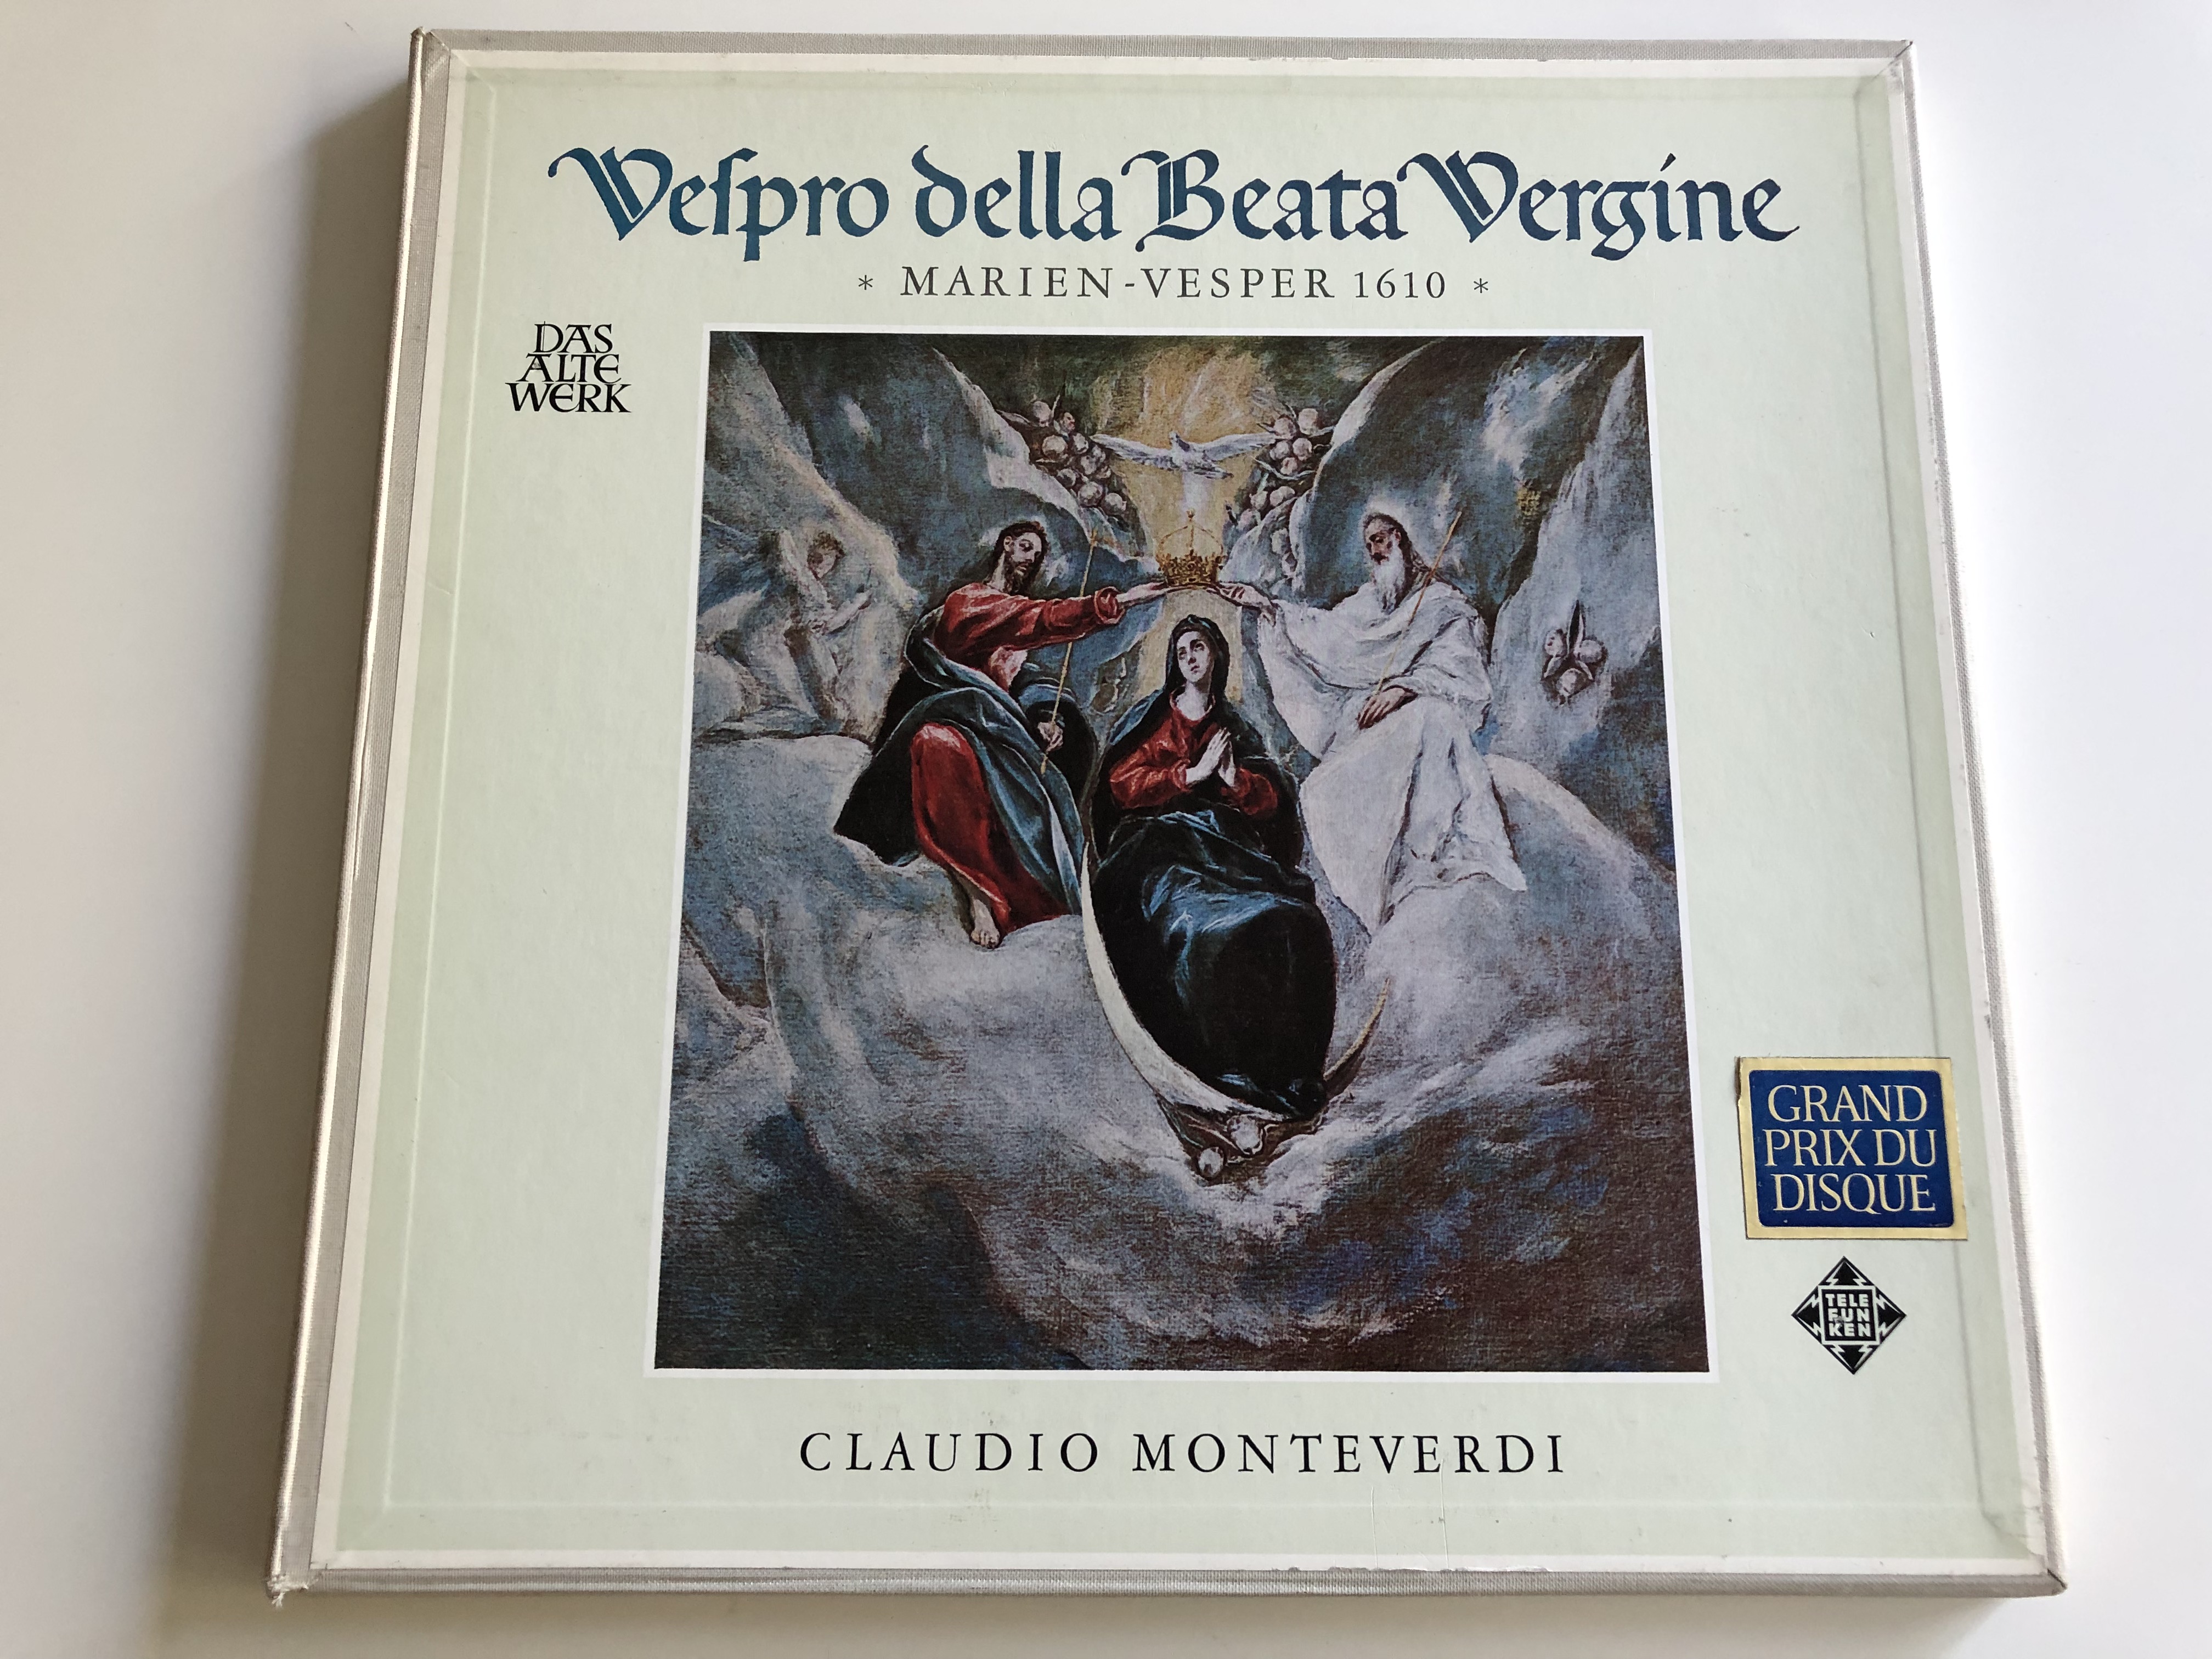 vespro-della-beata-vergine-marien-vesper-1610-composed-claudio-monteverdi-conducted-j-rgen-j-rgens-telefunken-2x-lp-stereo-sawt-950102-a-1-.jpg